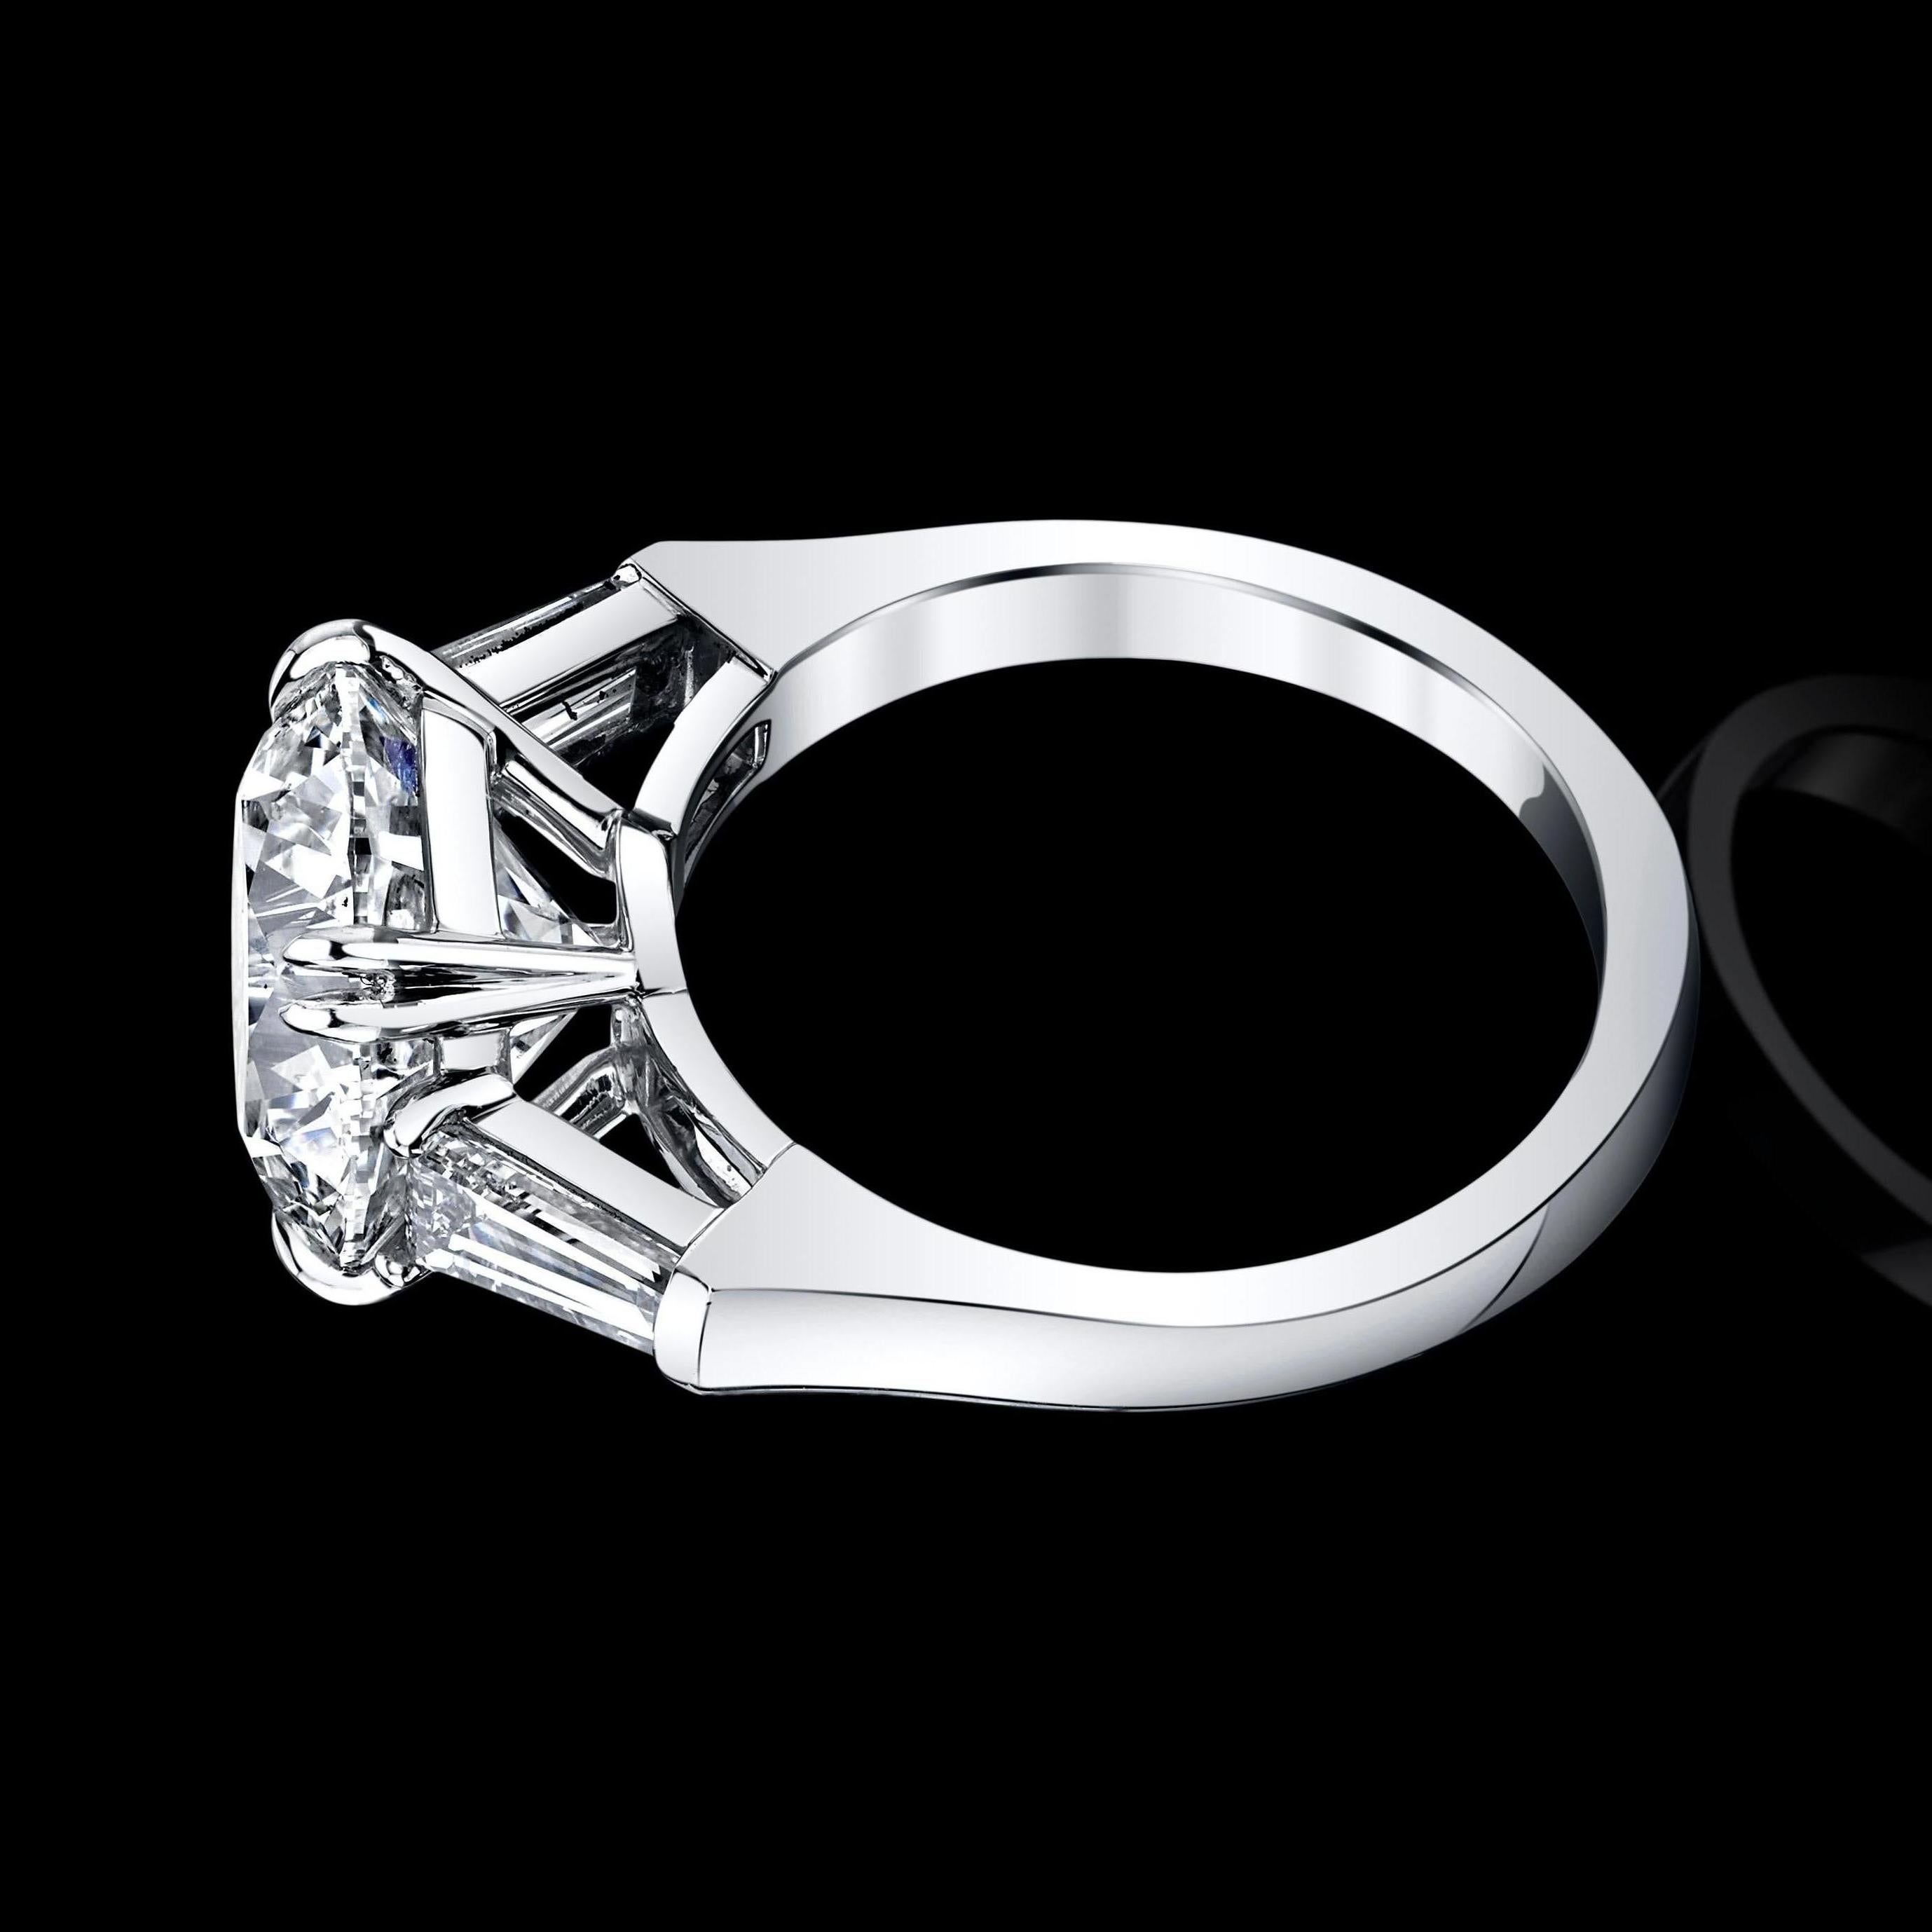 Round Cut GIA Certified 5.42 Round Brilliant Diamond Ring